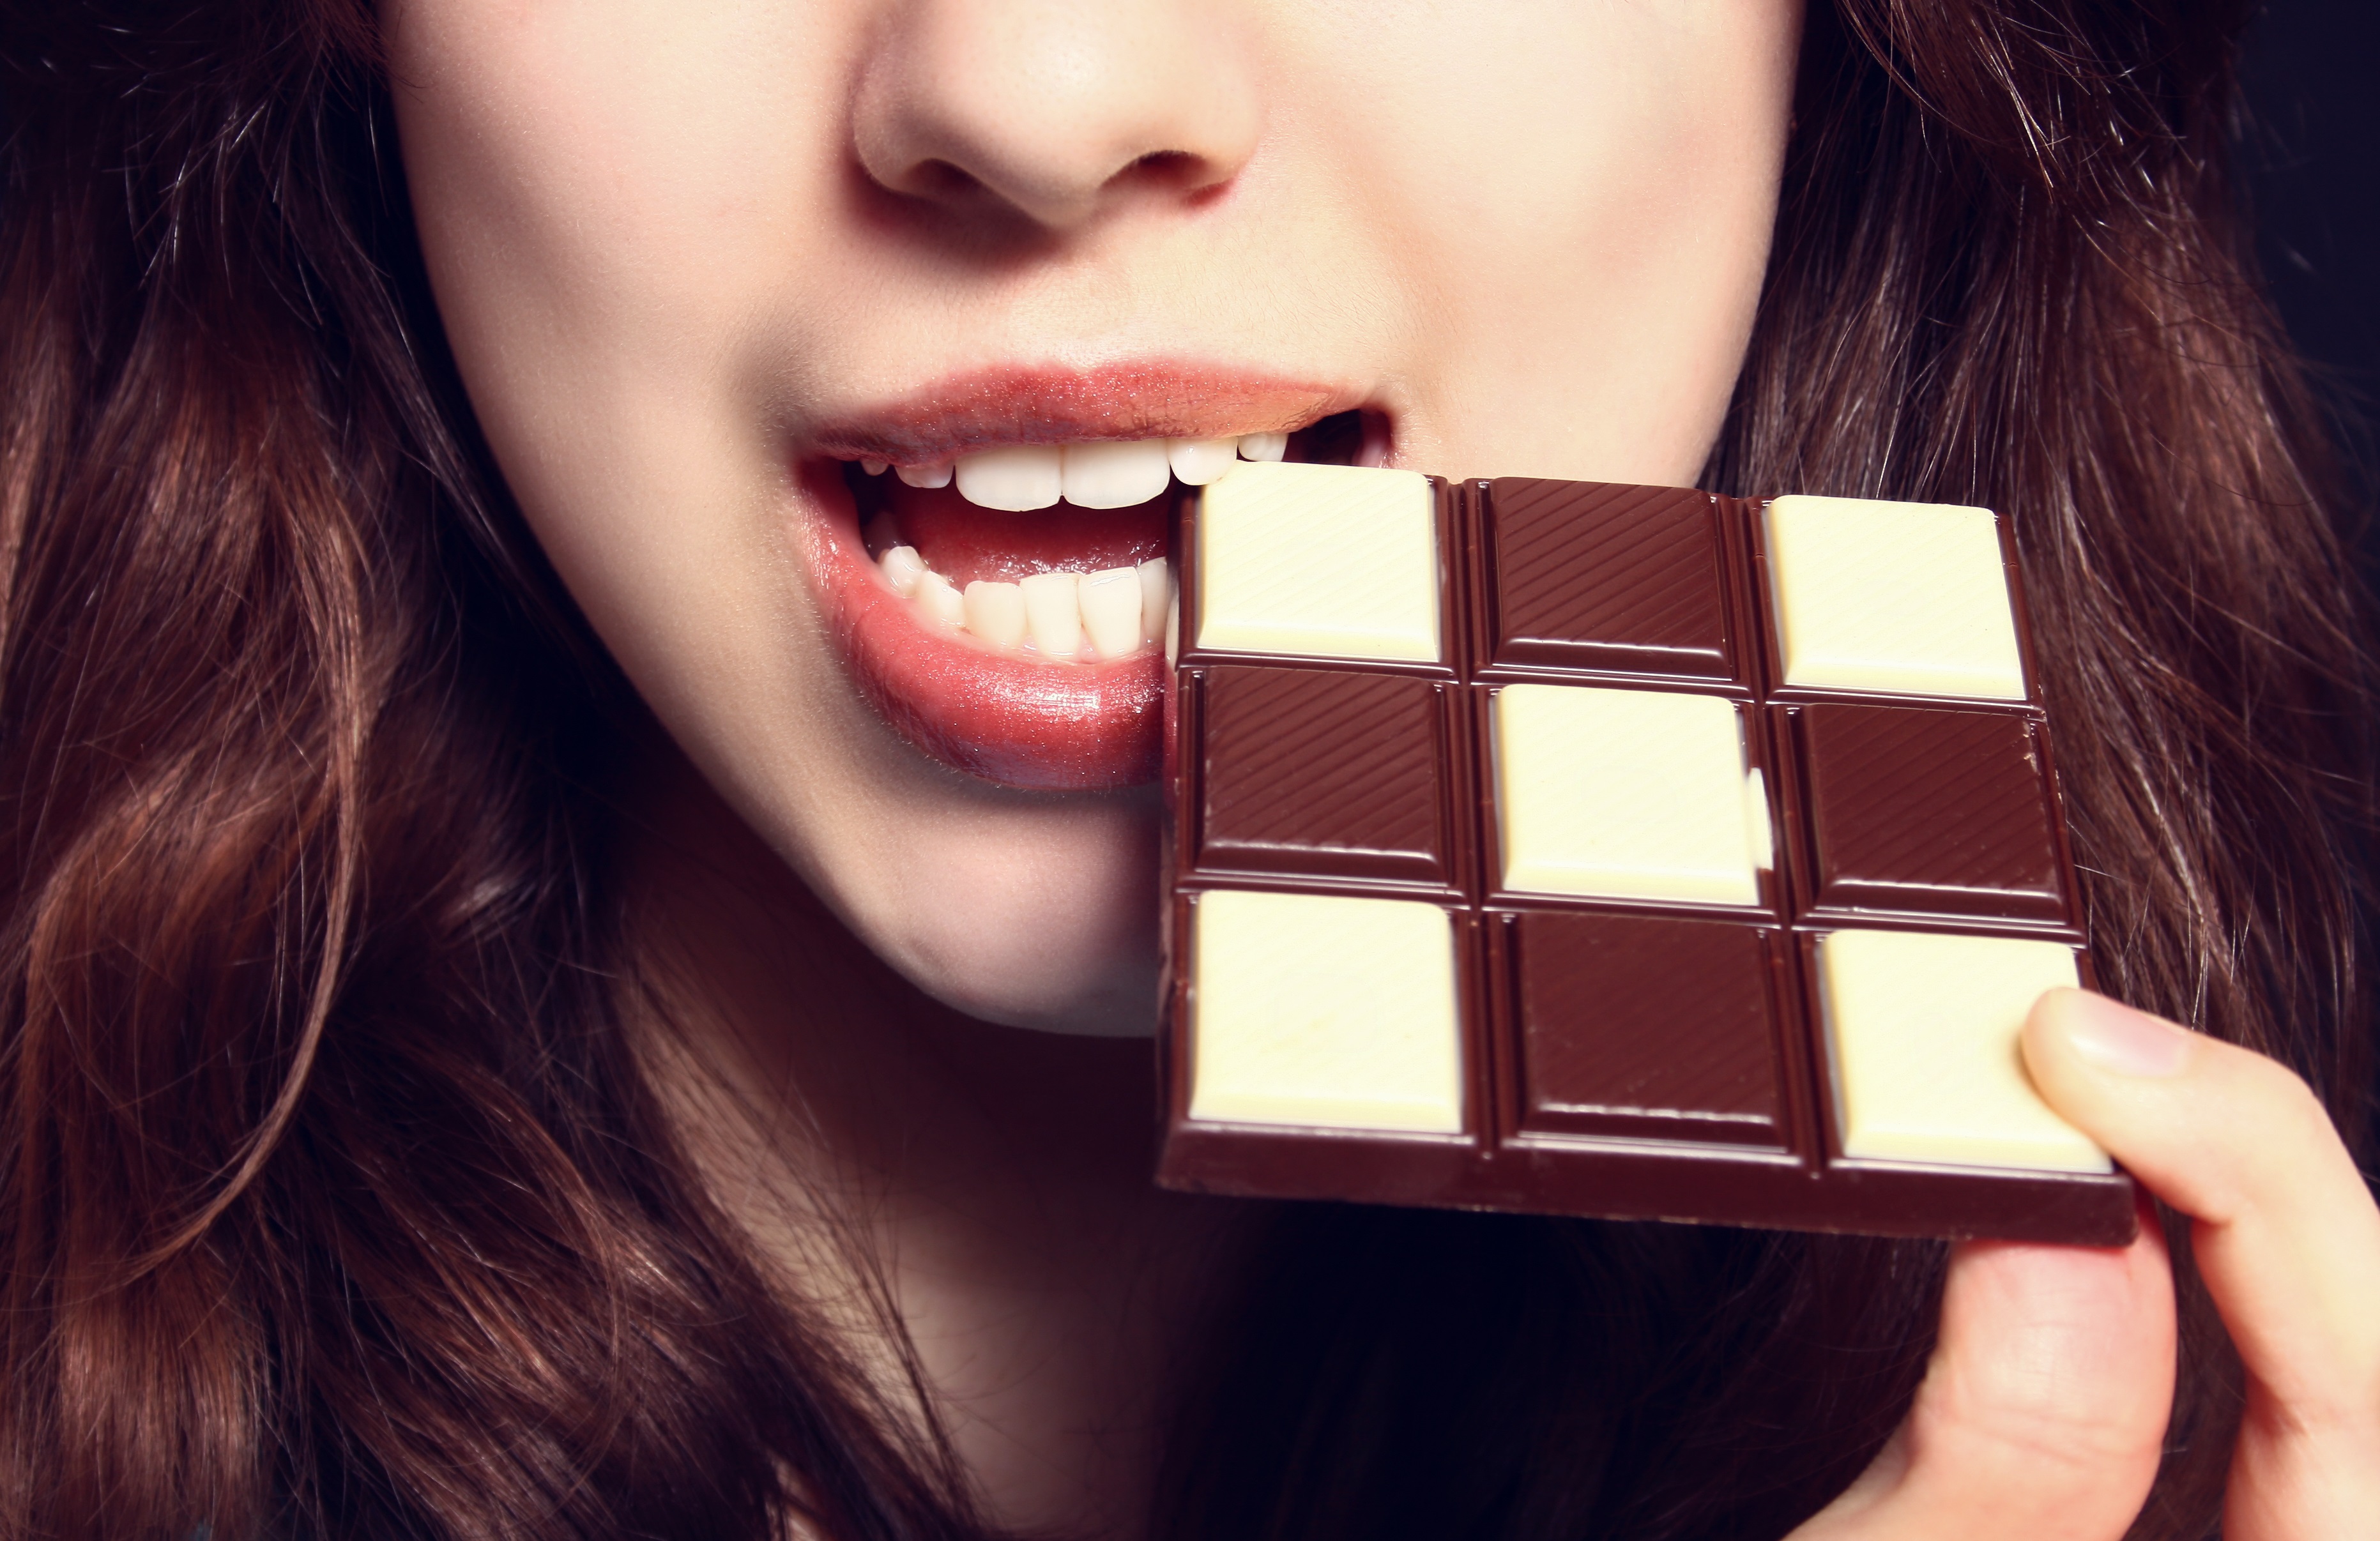 Шоколадки кушаем. Девушка в шоколаде. Девушка с шоколадкой. Девушка ест шоколад. Фотосессия с шоколадом.